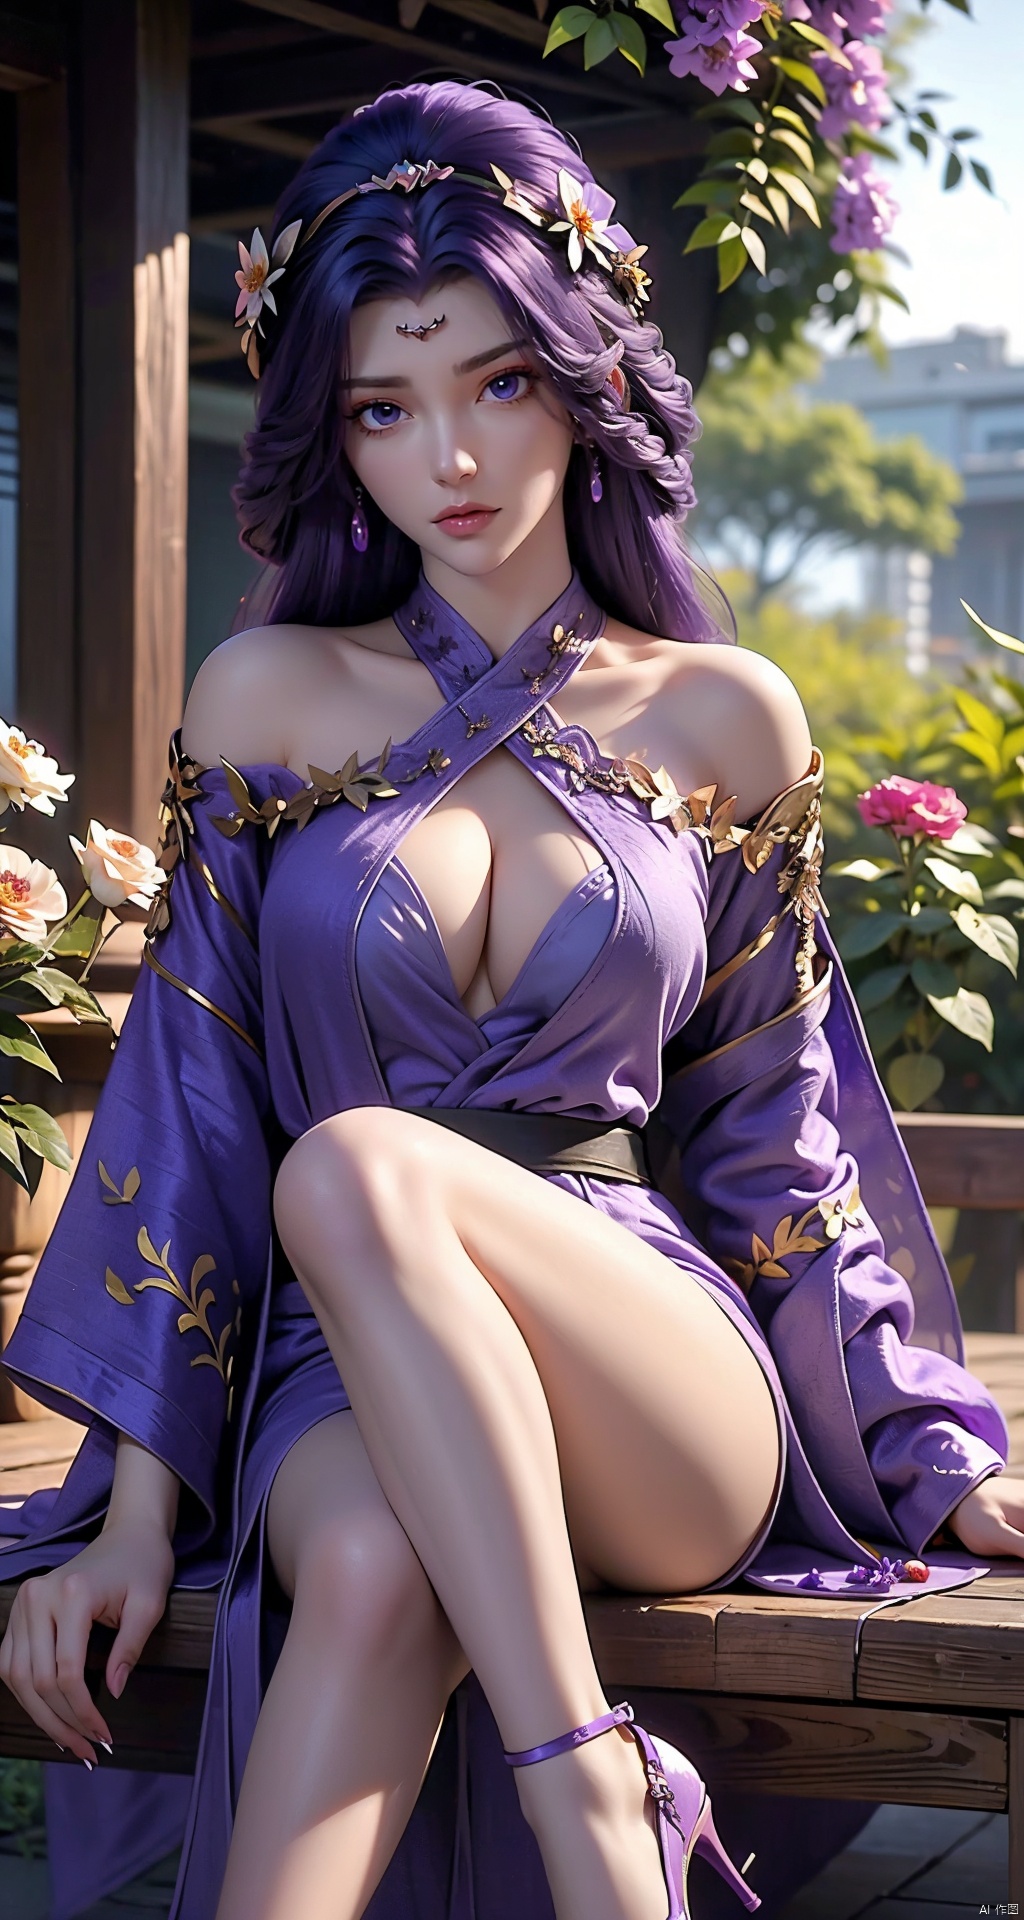 (purple hair: 1.2), 1 girl, (purple robe: 1.2), hair accessories, big breasts, sitting, whole body, plants, flowers, sitting in flowers, high heels, (hand details)